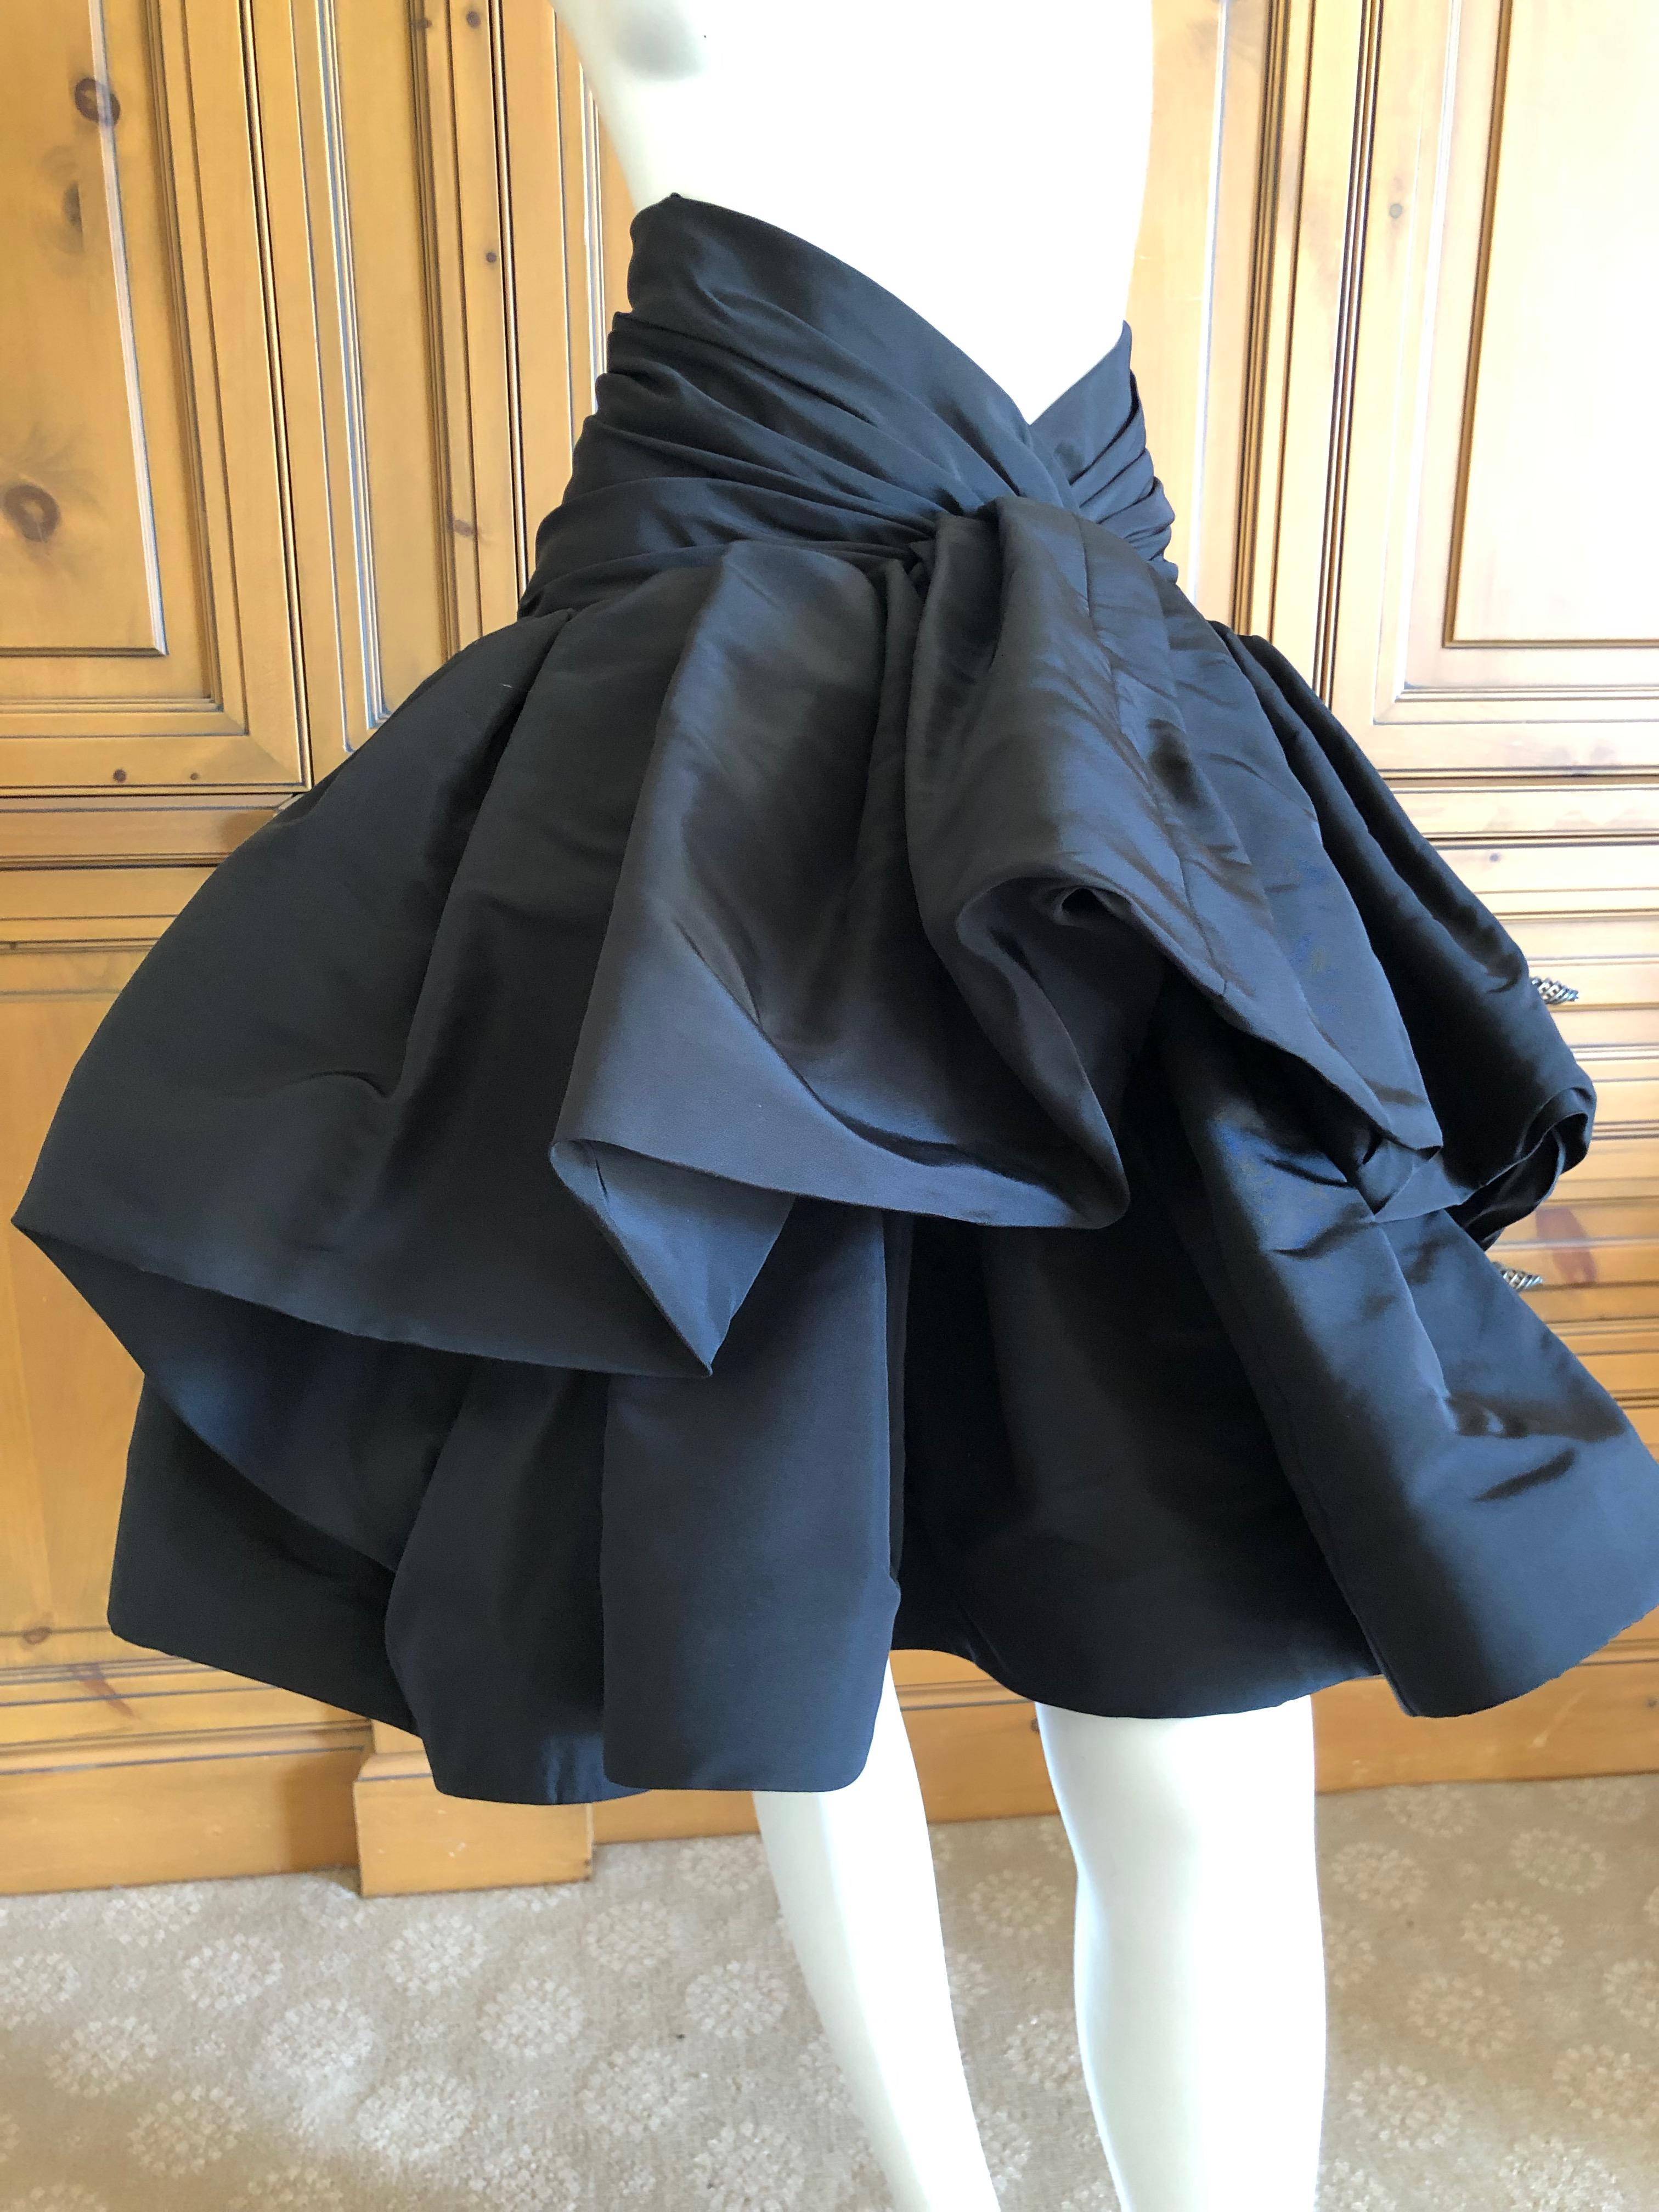 Oscar de la Renta Dramatic Vintage Black Silk Taffeta Ball Skirt XS (4) For Sale 3